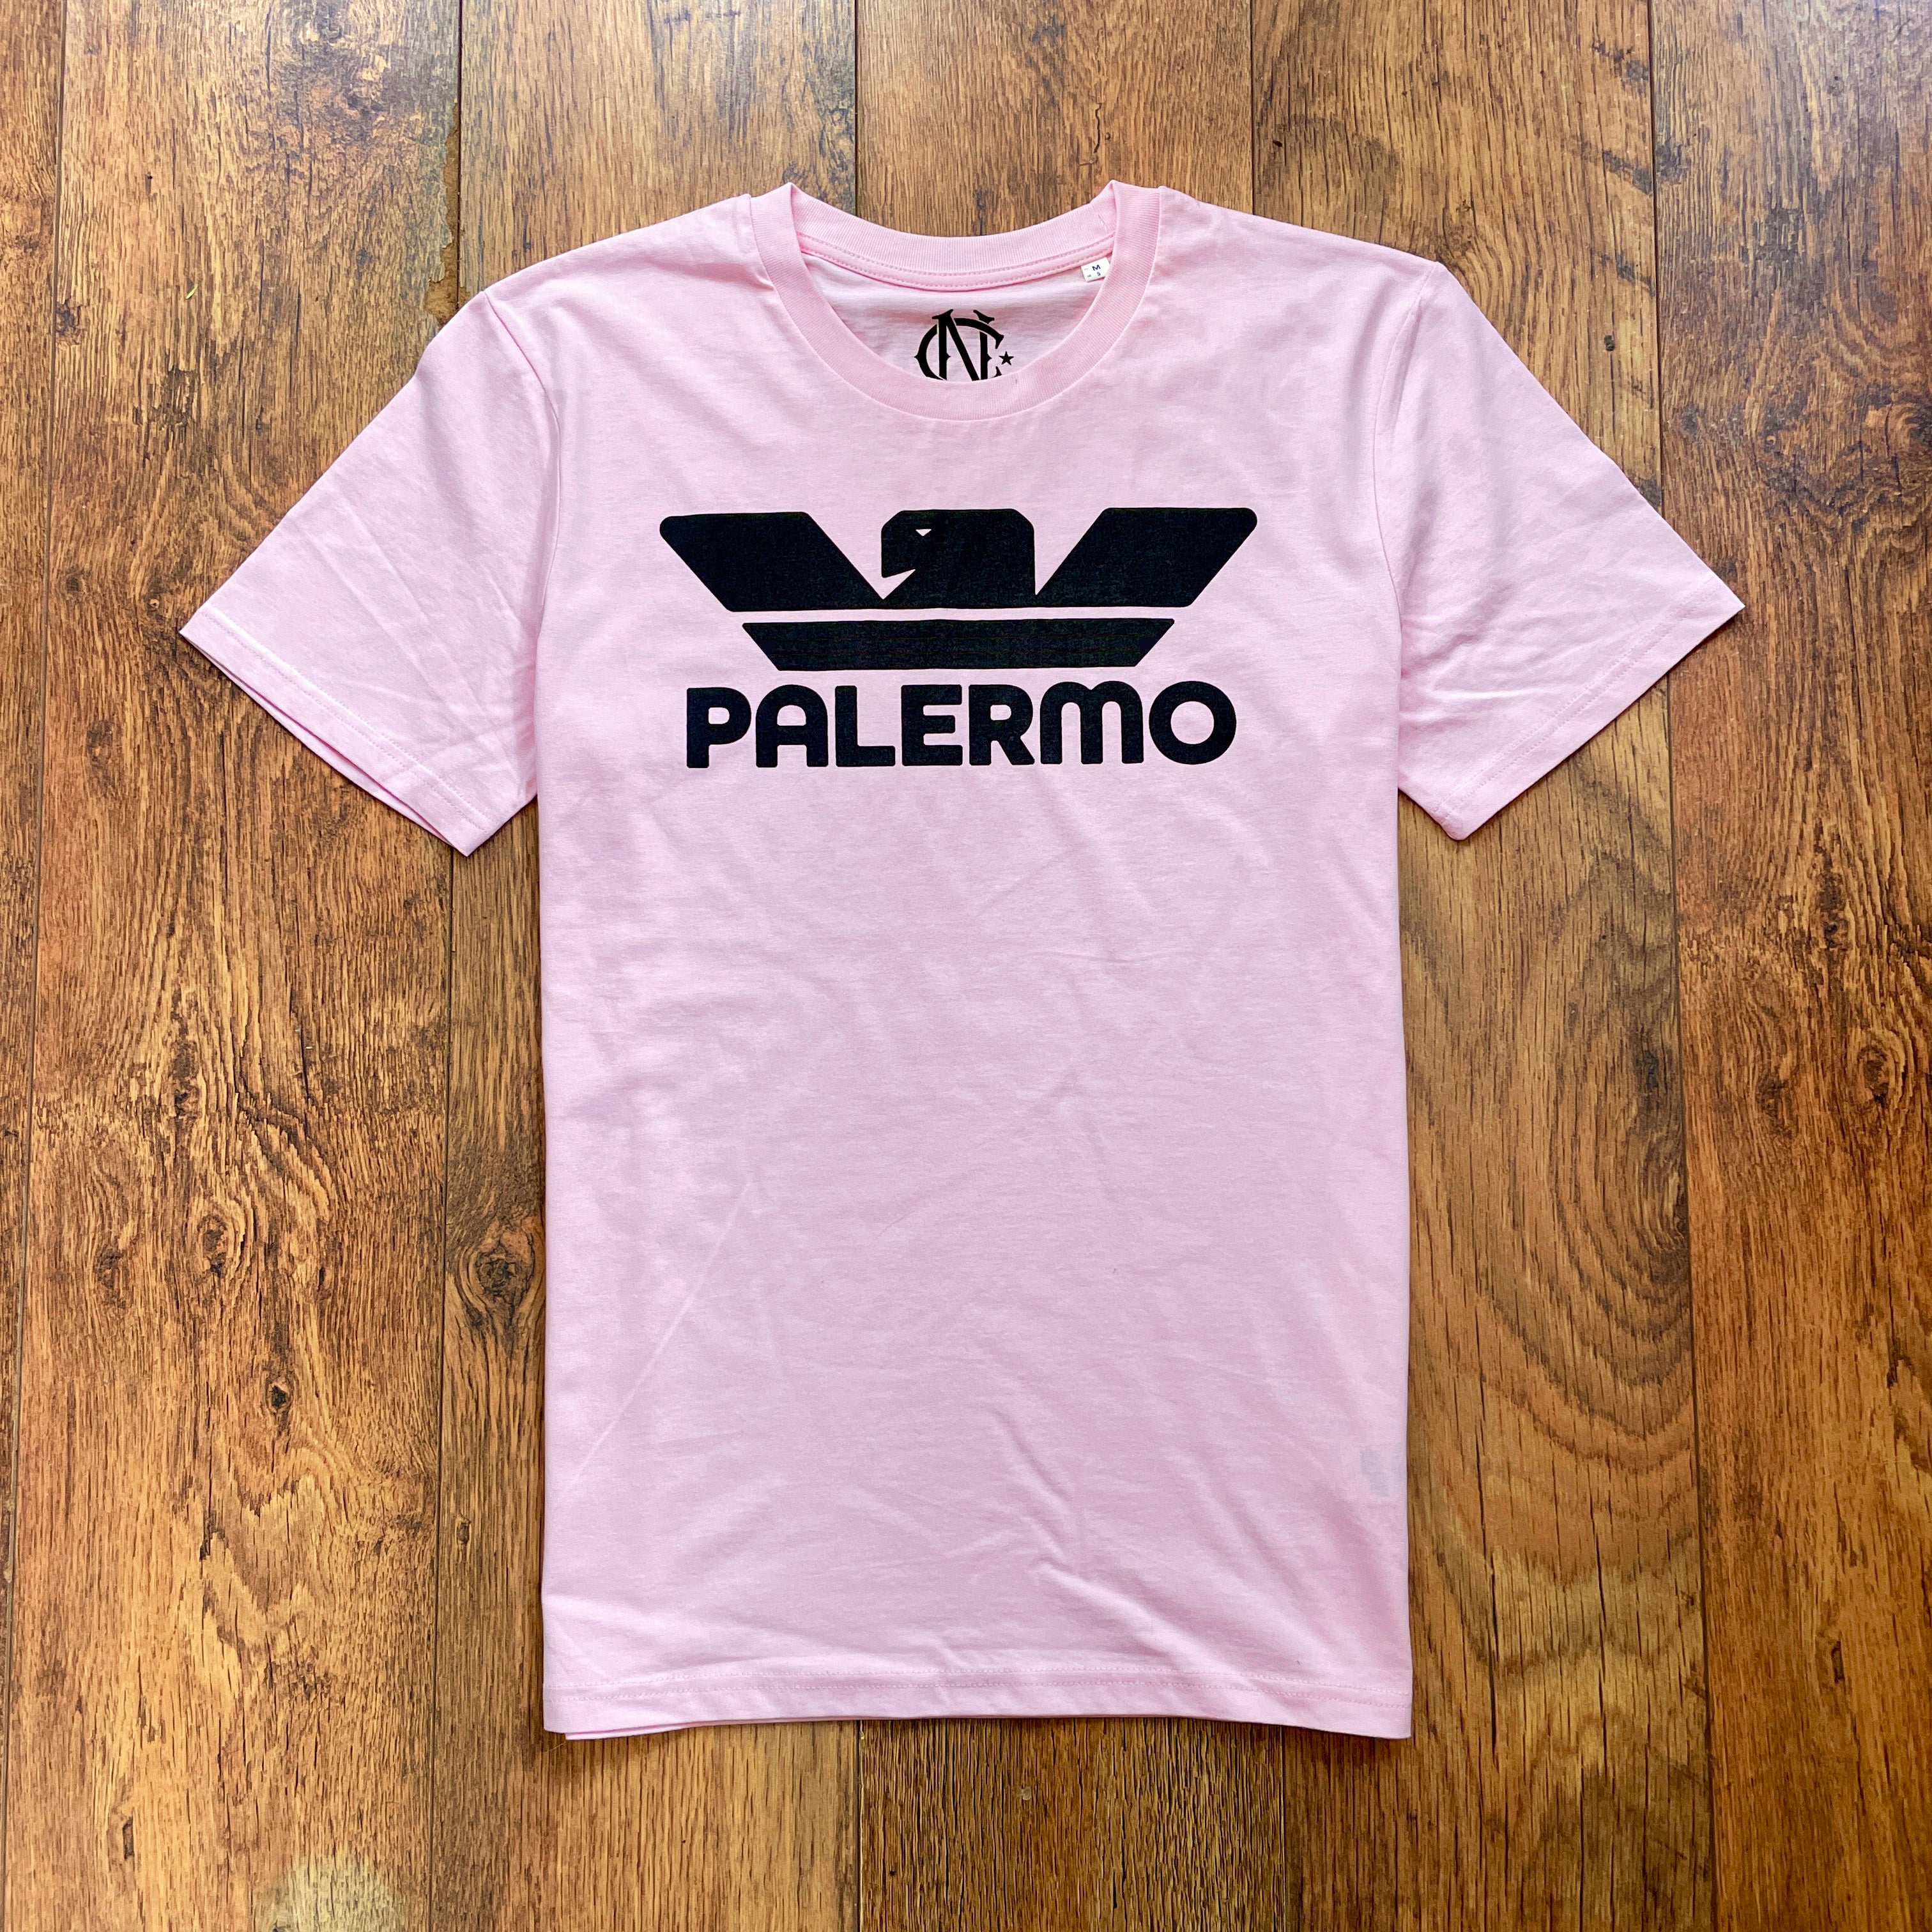 Palermo football shirt t-shirt